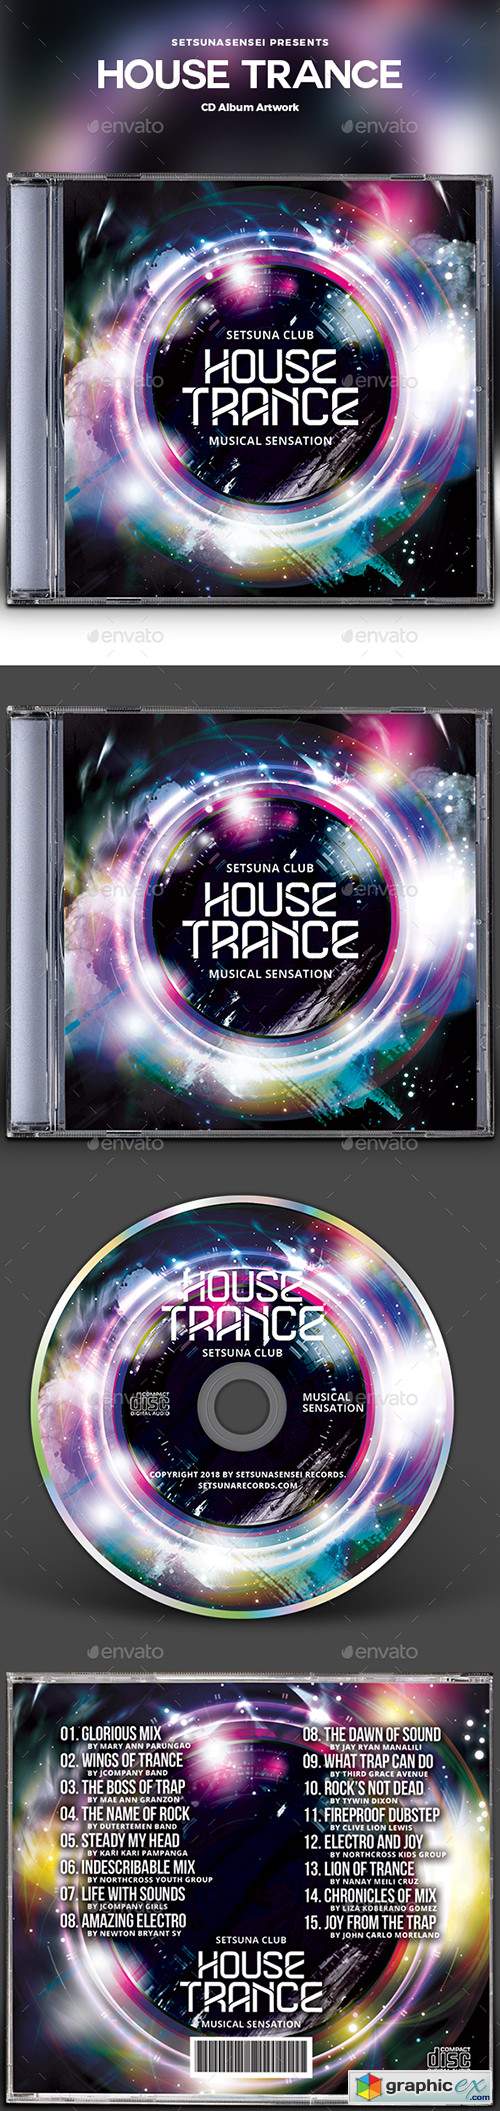 House Trance CD Album Artwork